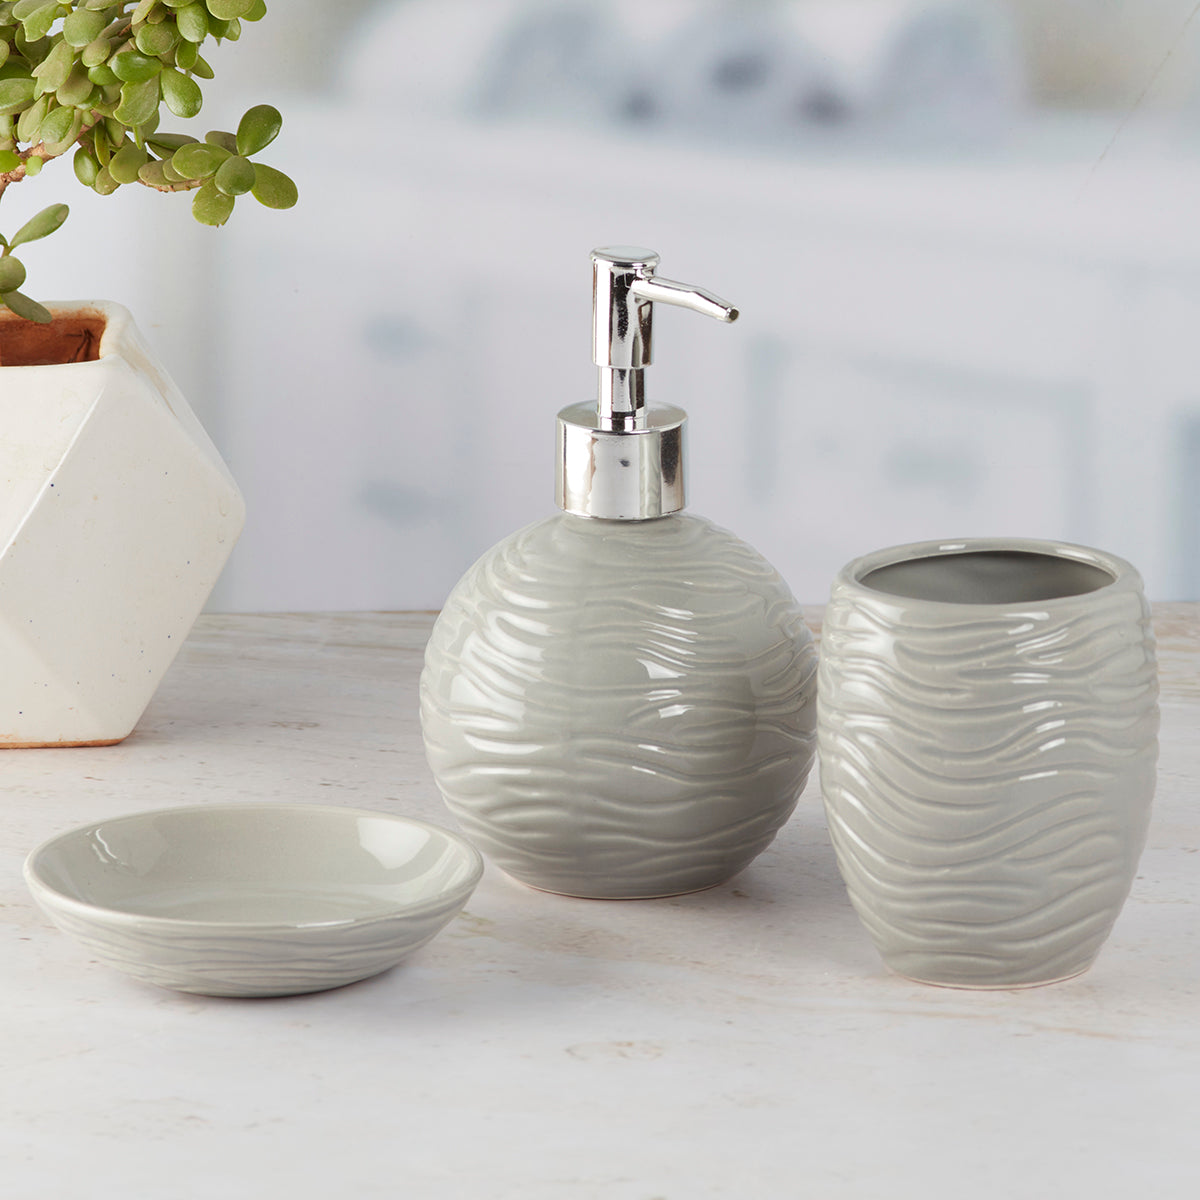 Ceramic Bathroom Accessories Set of 3 Bath Set with Soap Dispenser (8338)